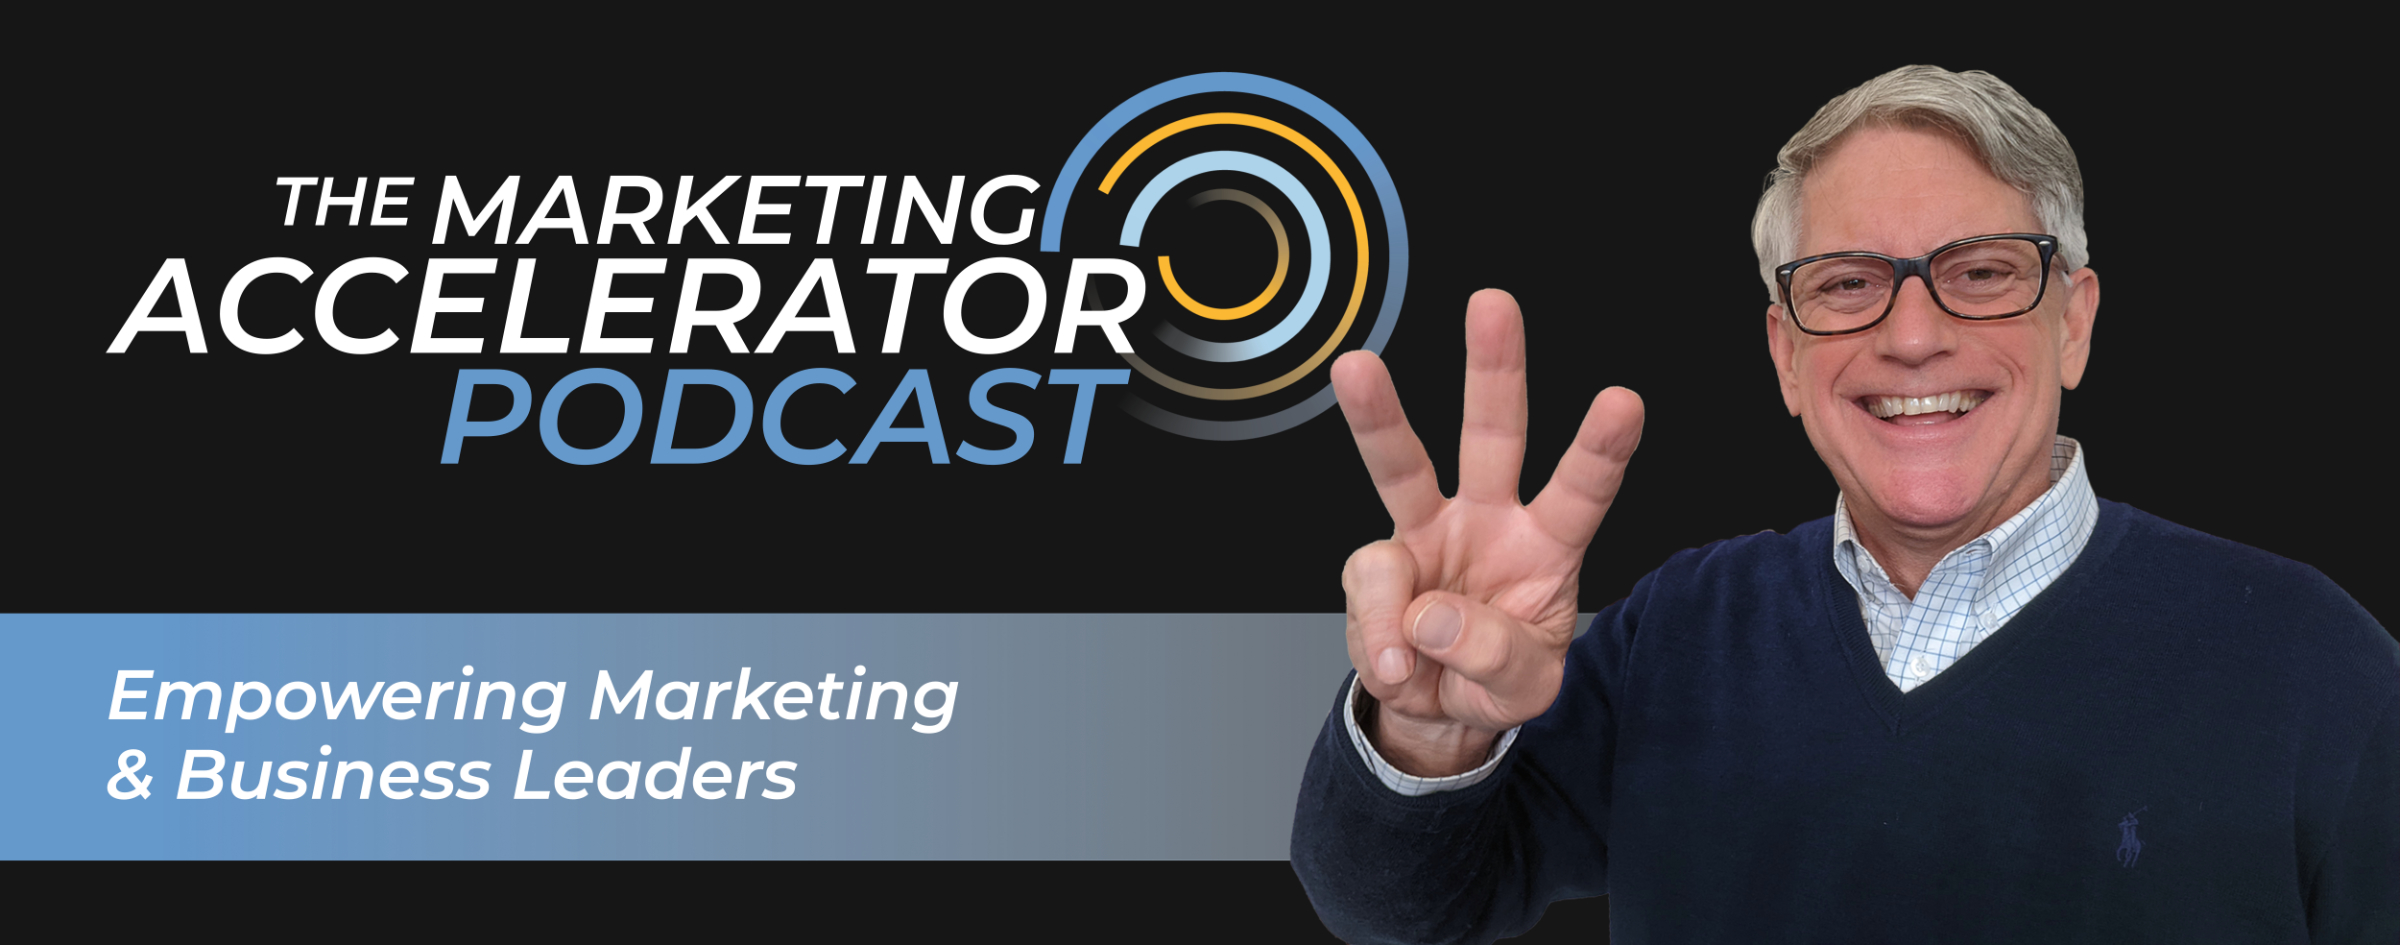 Marketing Accelerator Podcast